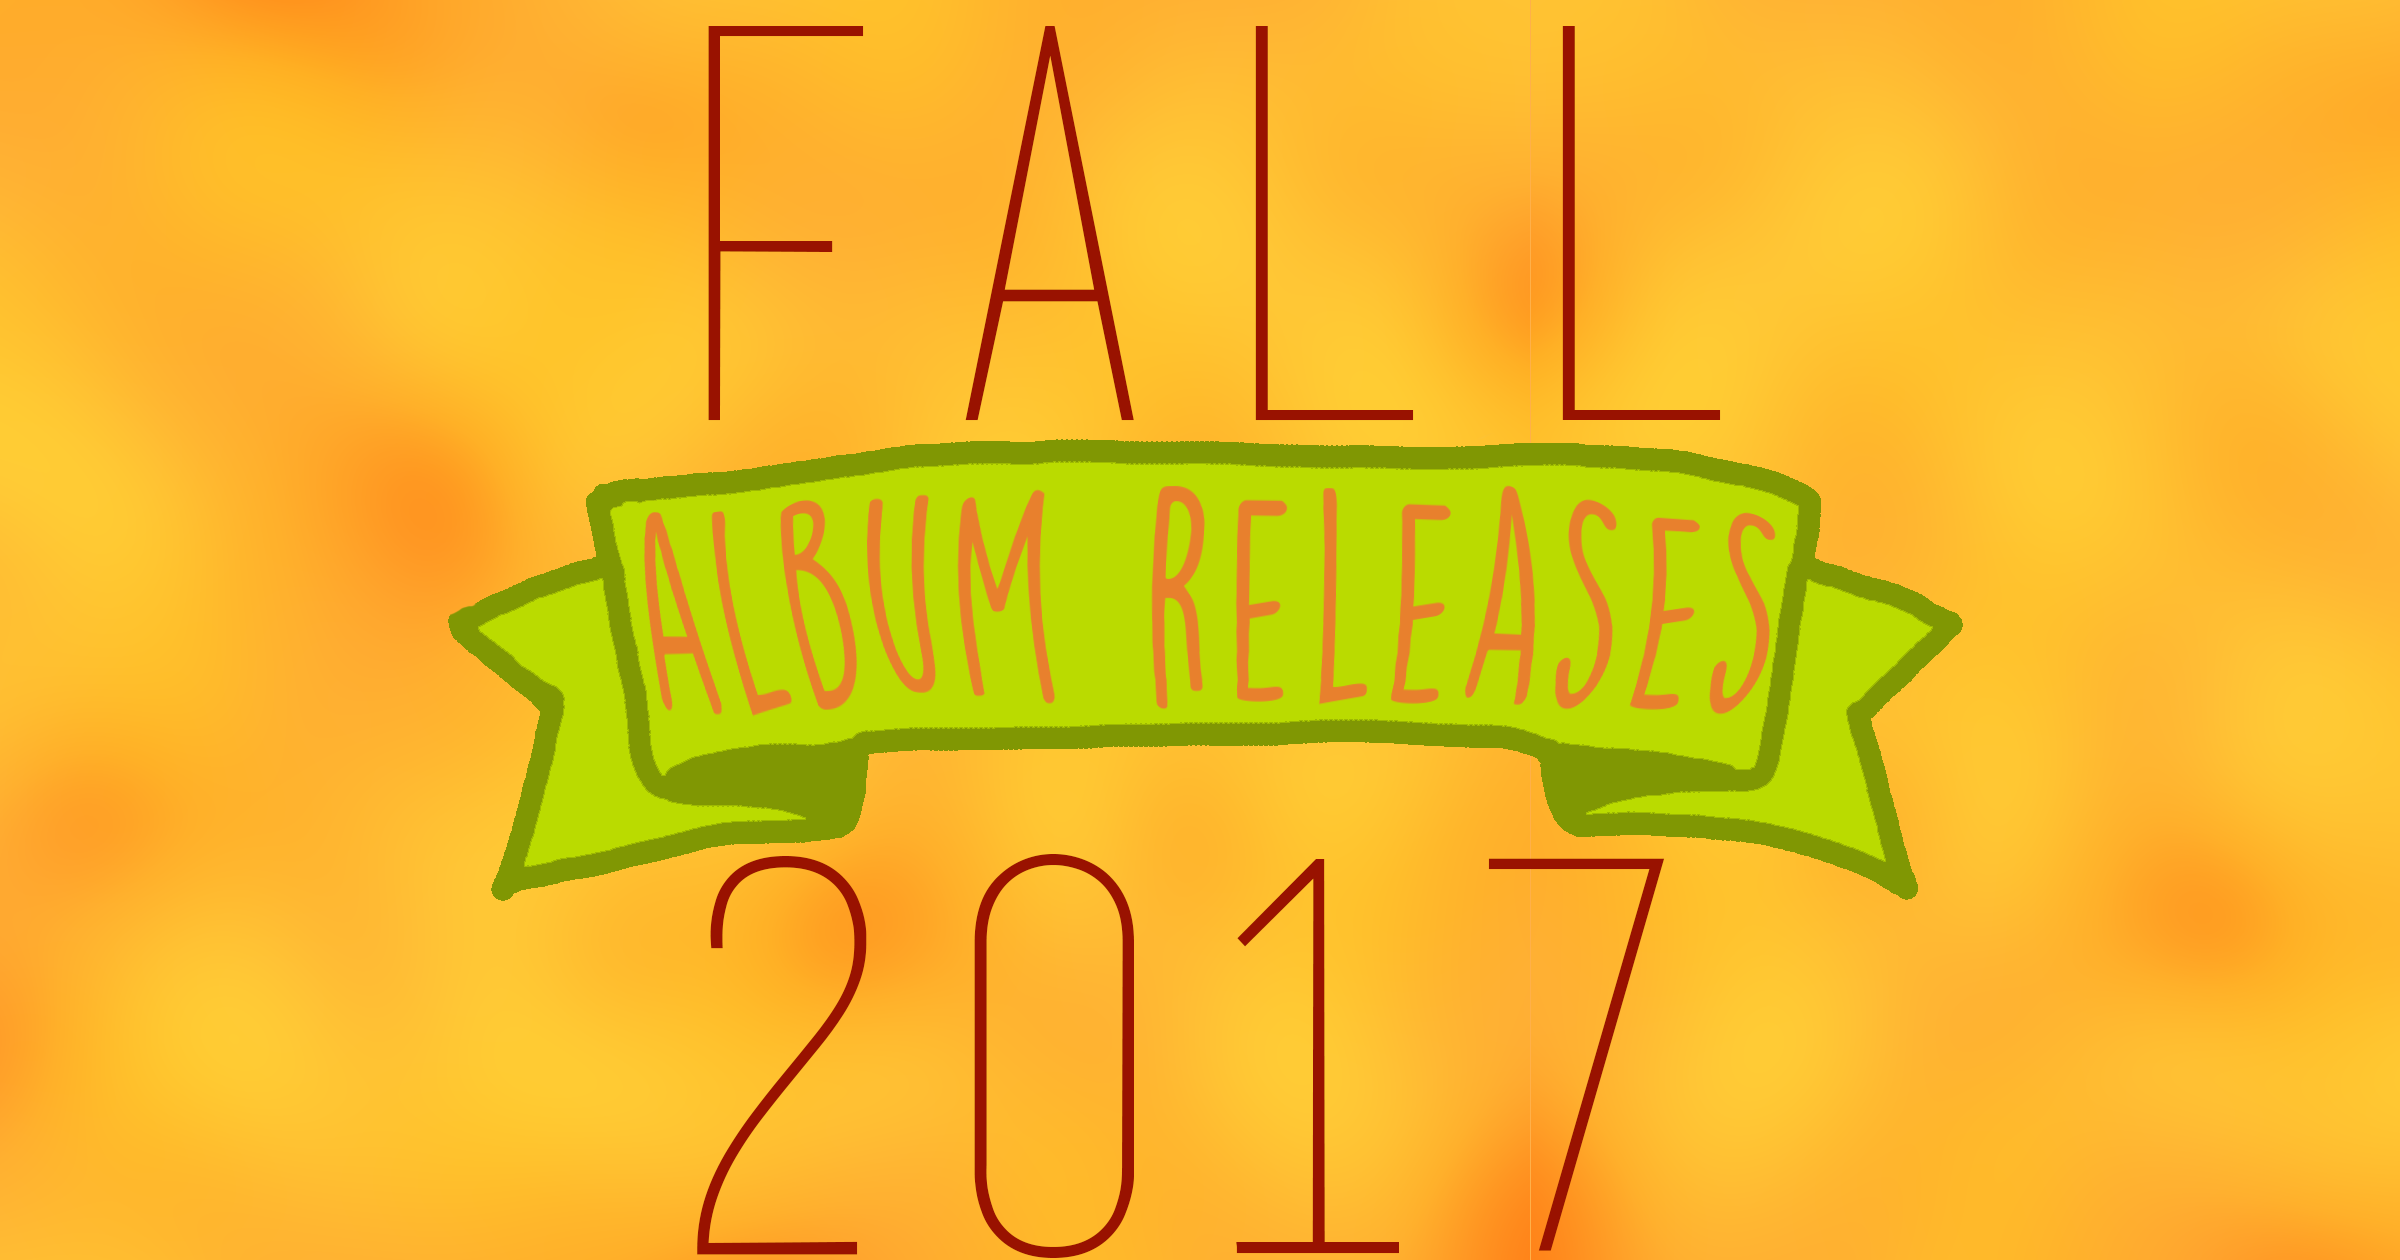 Fall Album Release 2017 Artwork